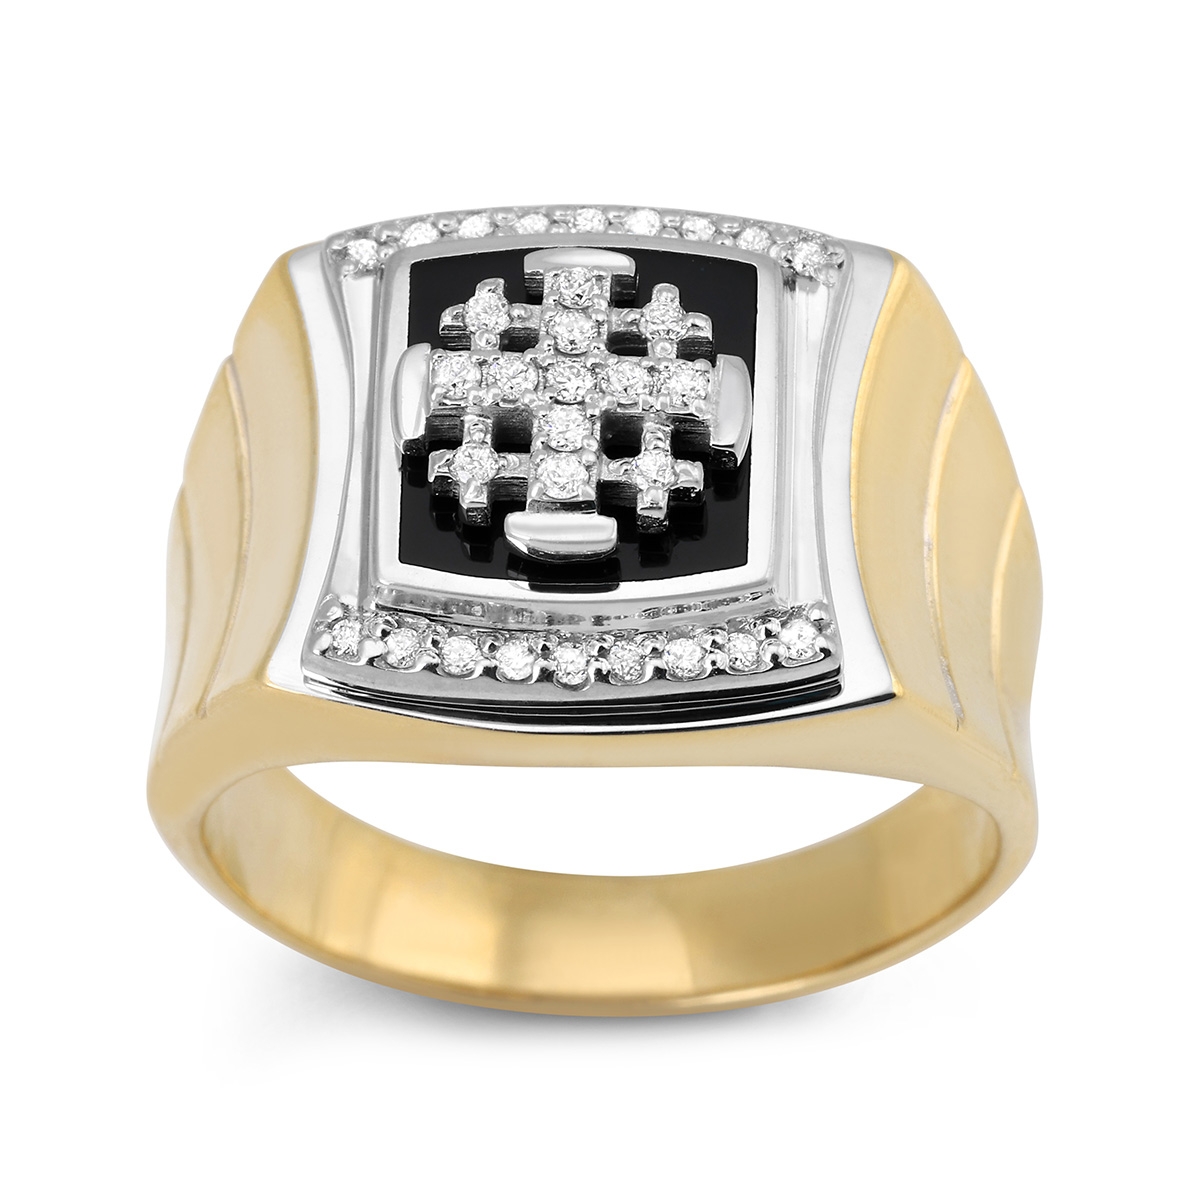 Anbinder Jewelry 14K Gold Square Jerusalem Cross Ring with Diamonds and Black Enamel - 1